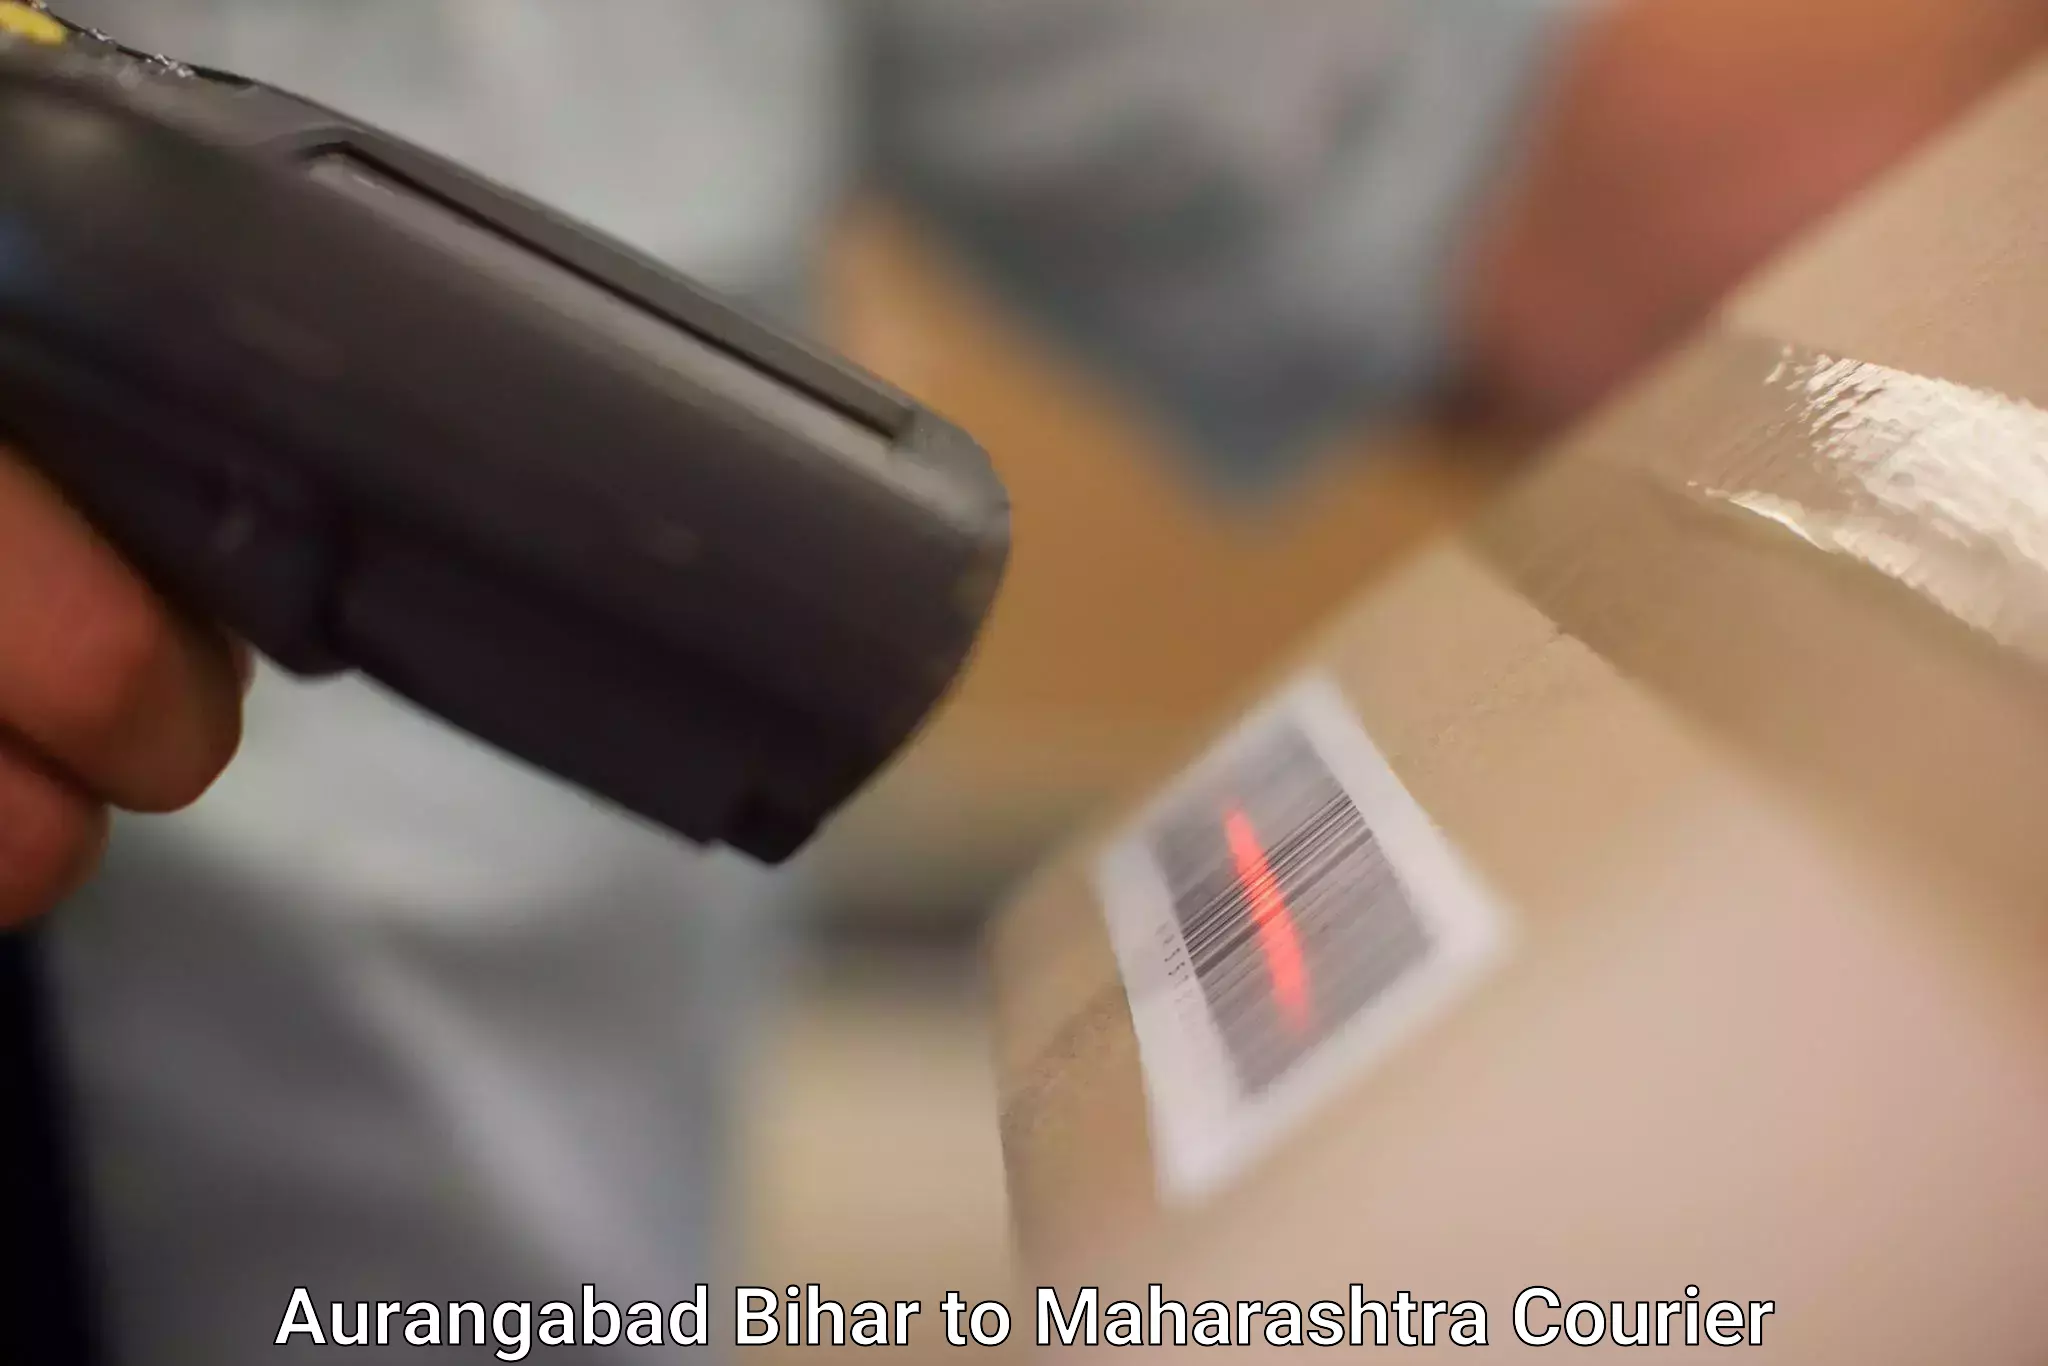 Local delivery service Aurangabad Bihar to Chandrapur